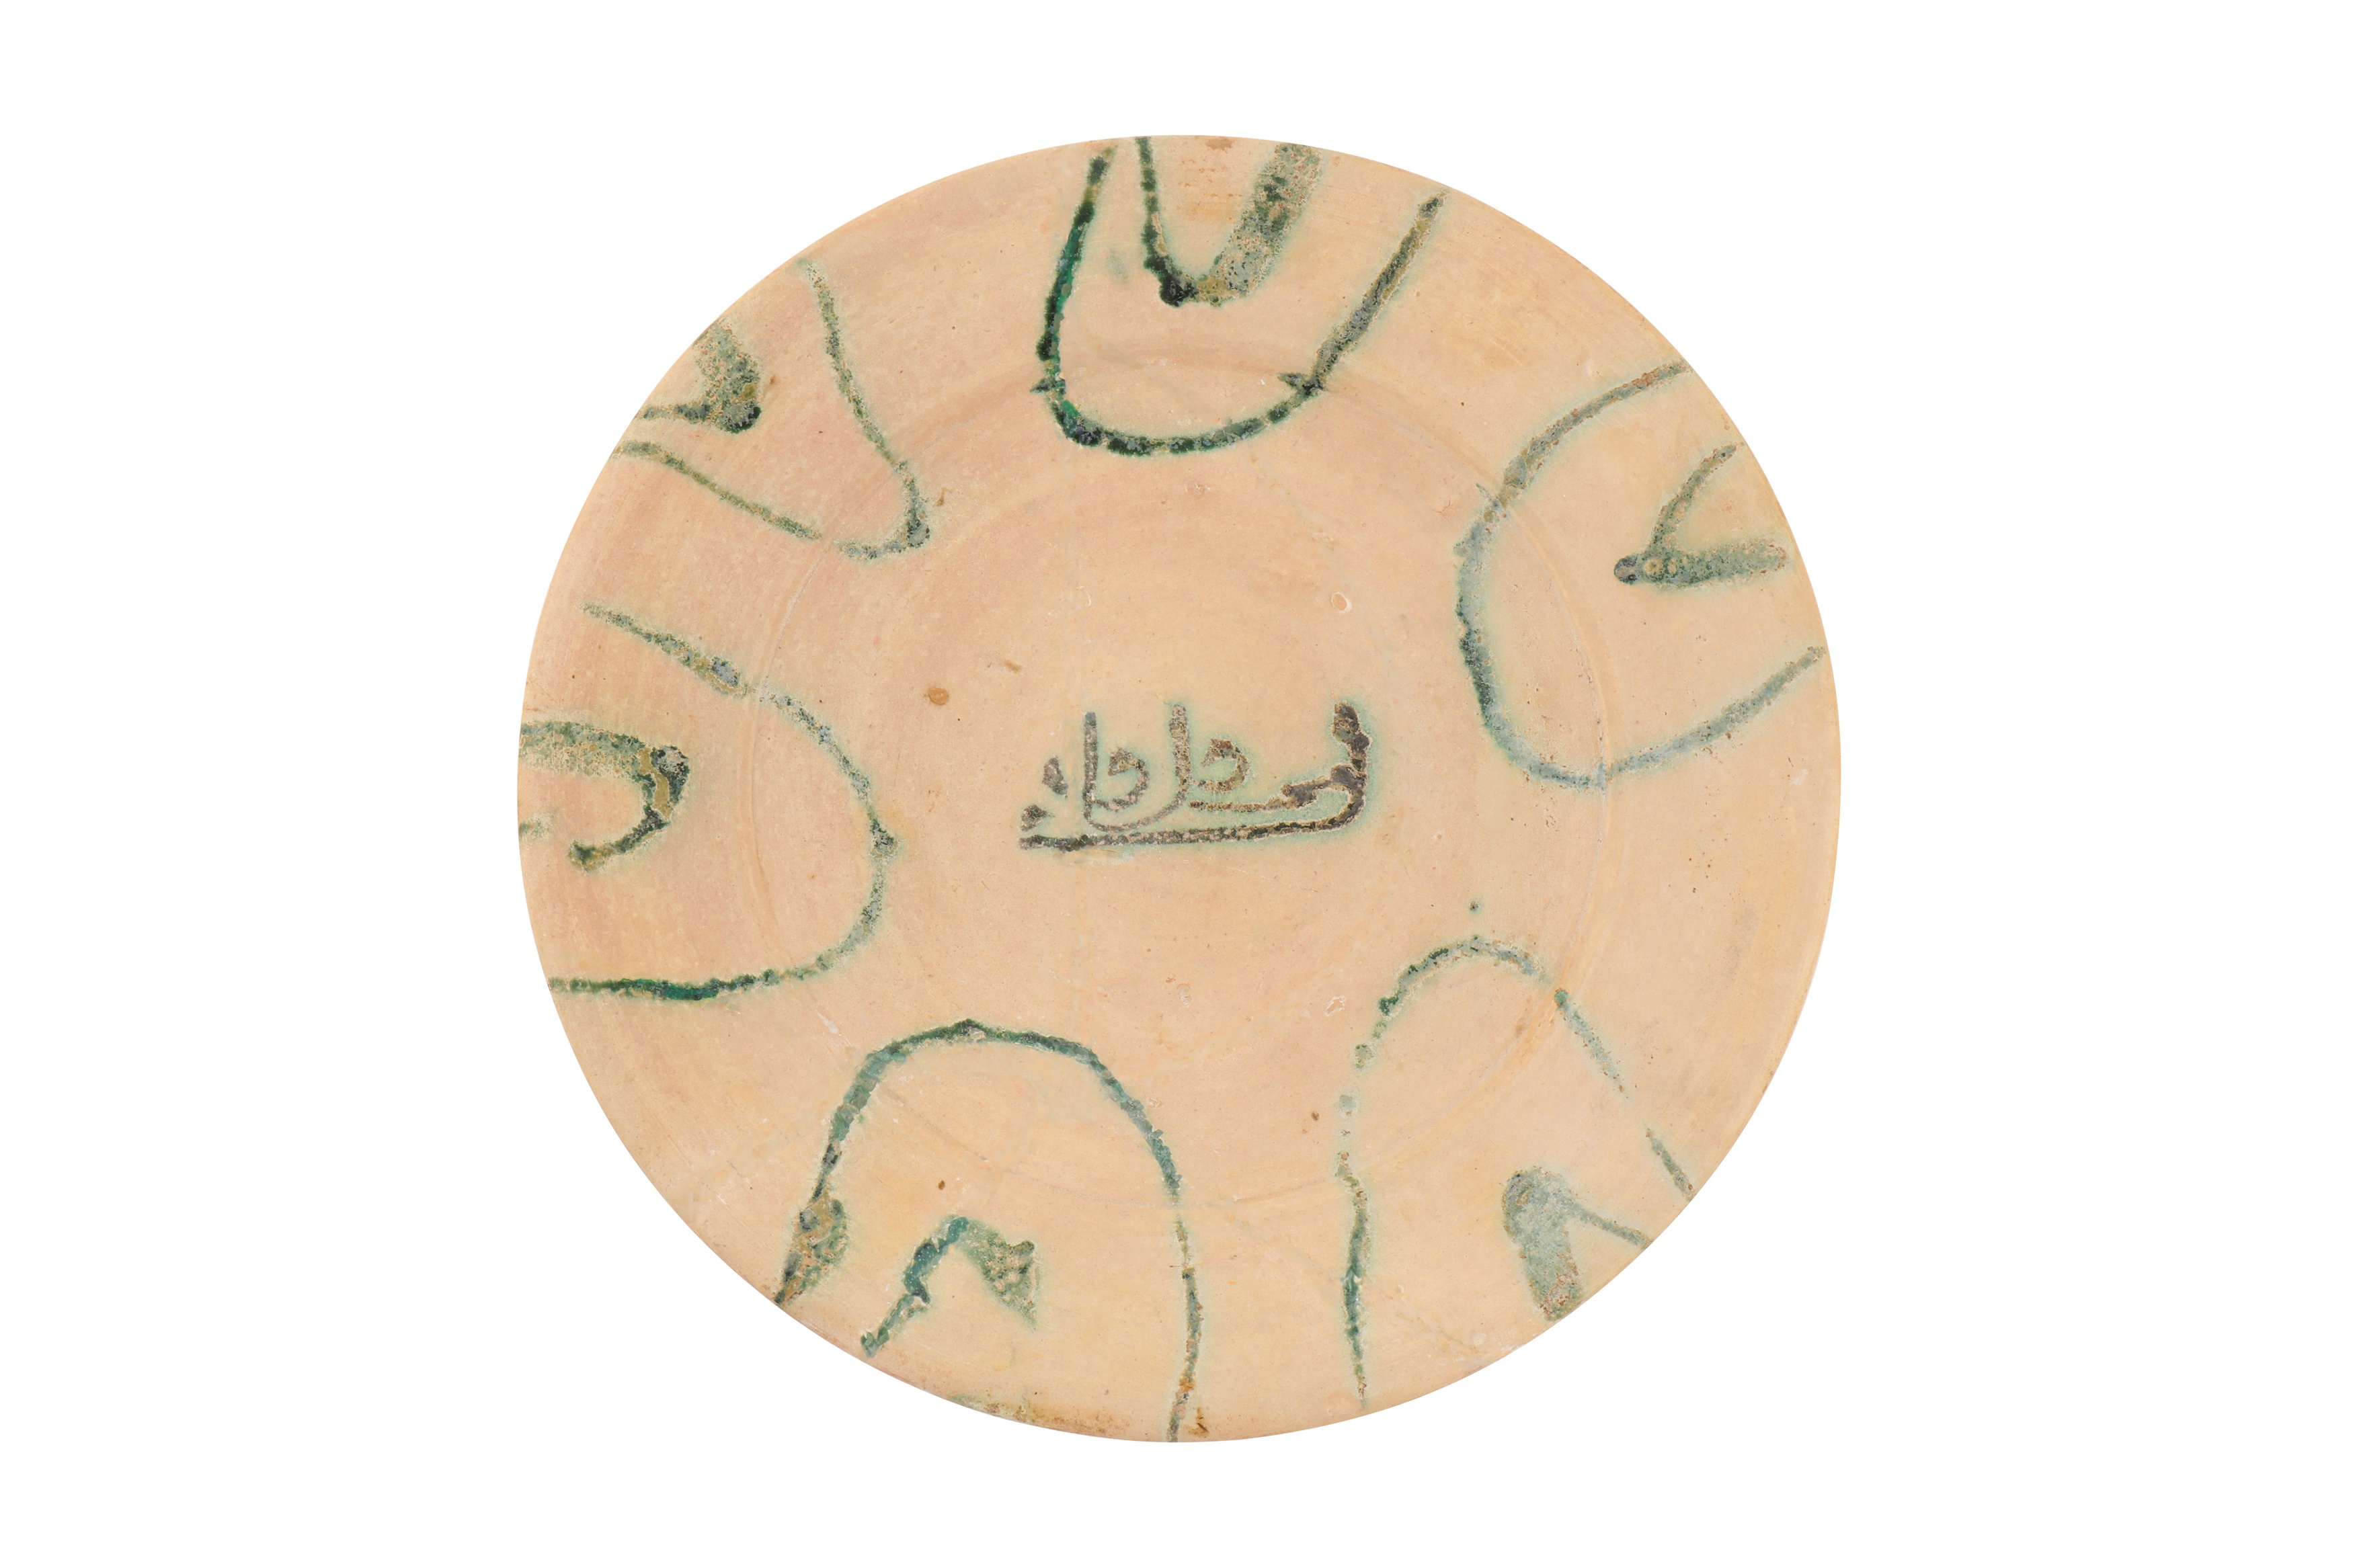 A RARE LARGE 9TH-10TH CENTURY MESOPOTAMIAN/ABBASID GLAZED POTTERY FLAT DISH